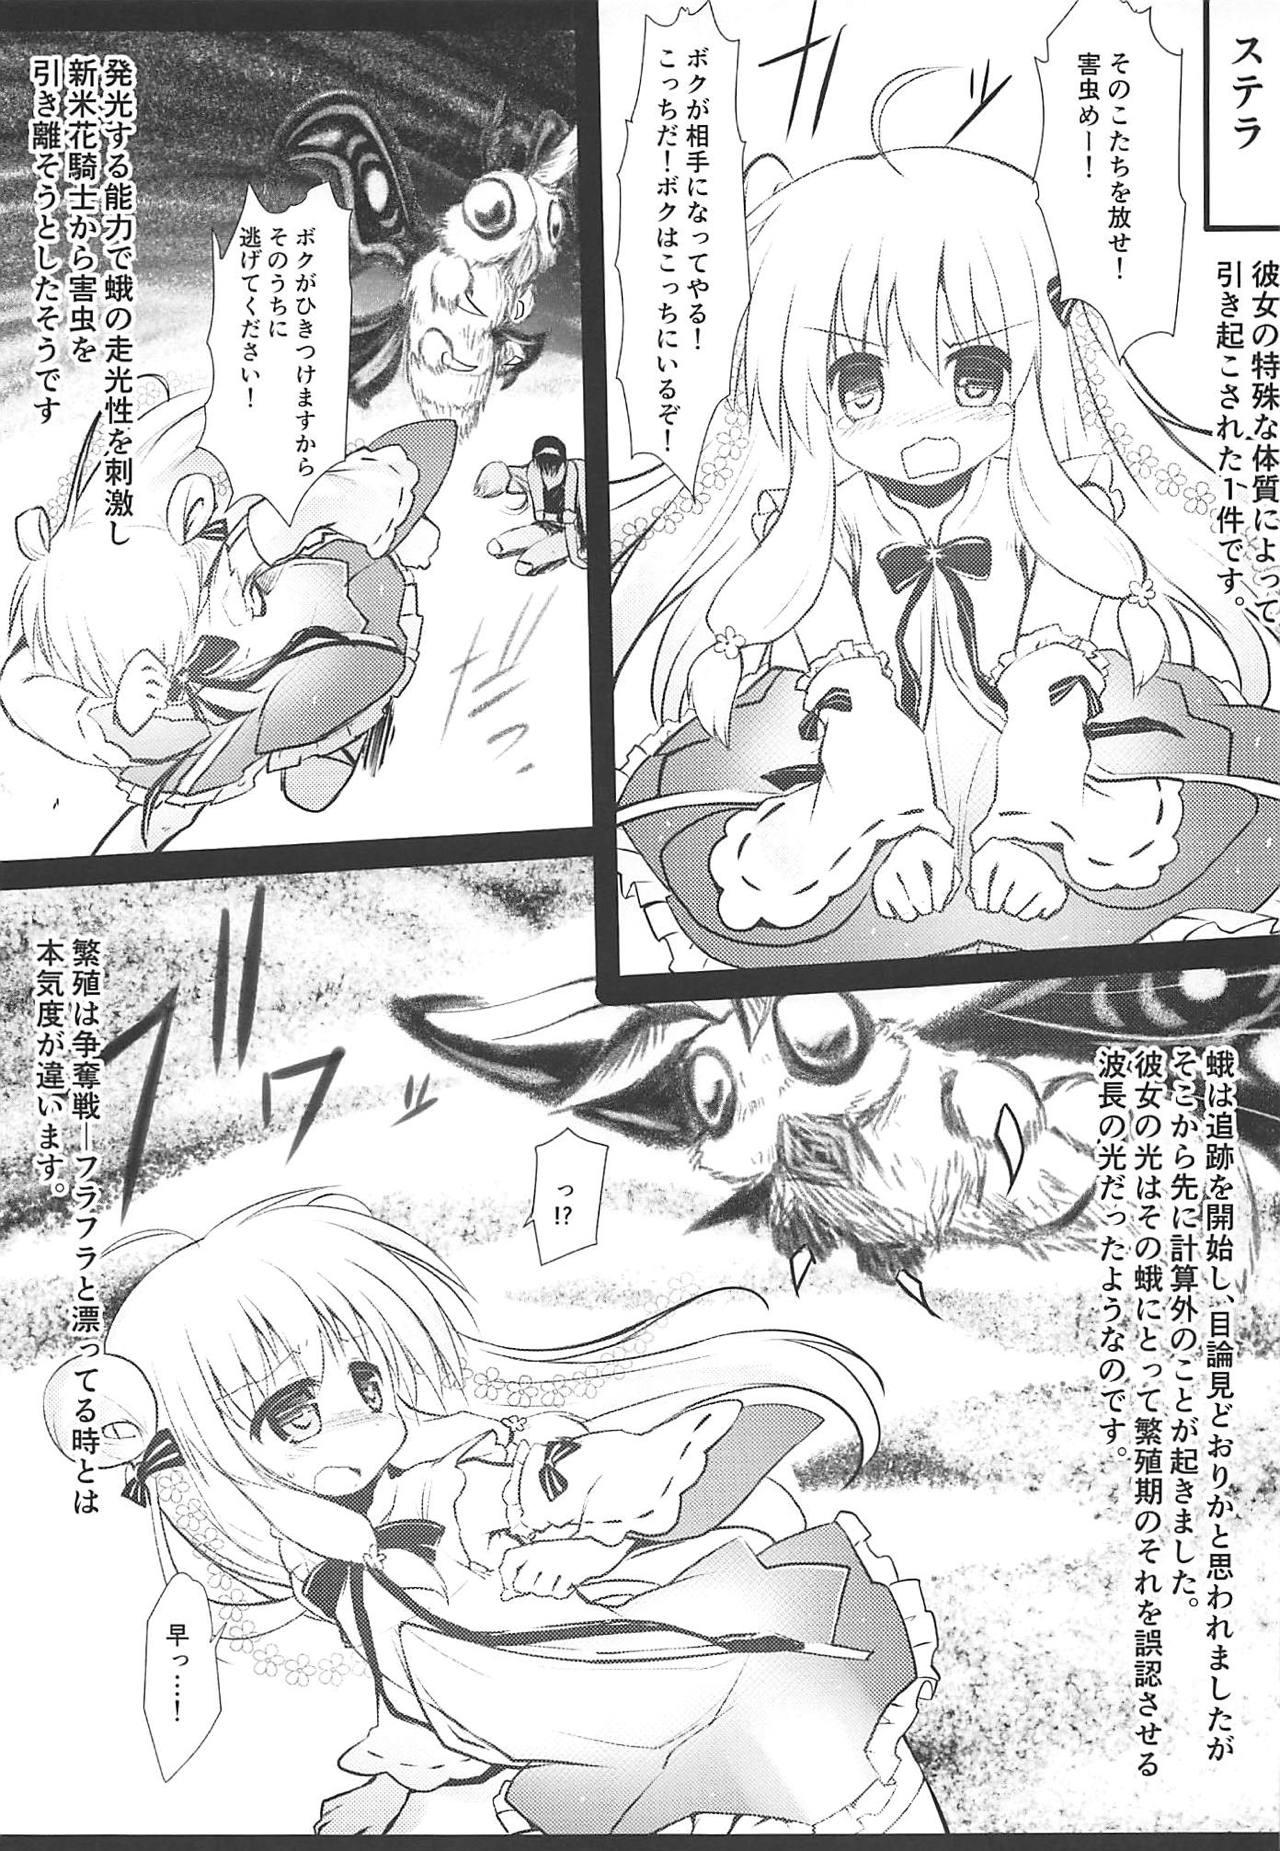 Gorda Gaichuu Higai Houkokusho File 3 - Flower knight girl Freak - Page 4